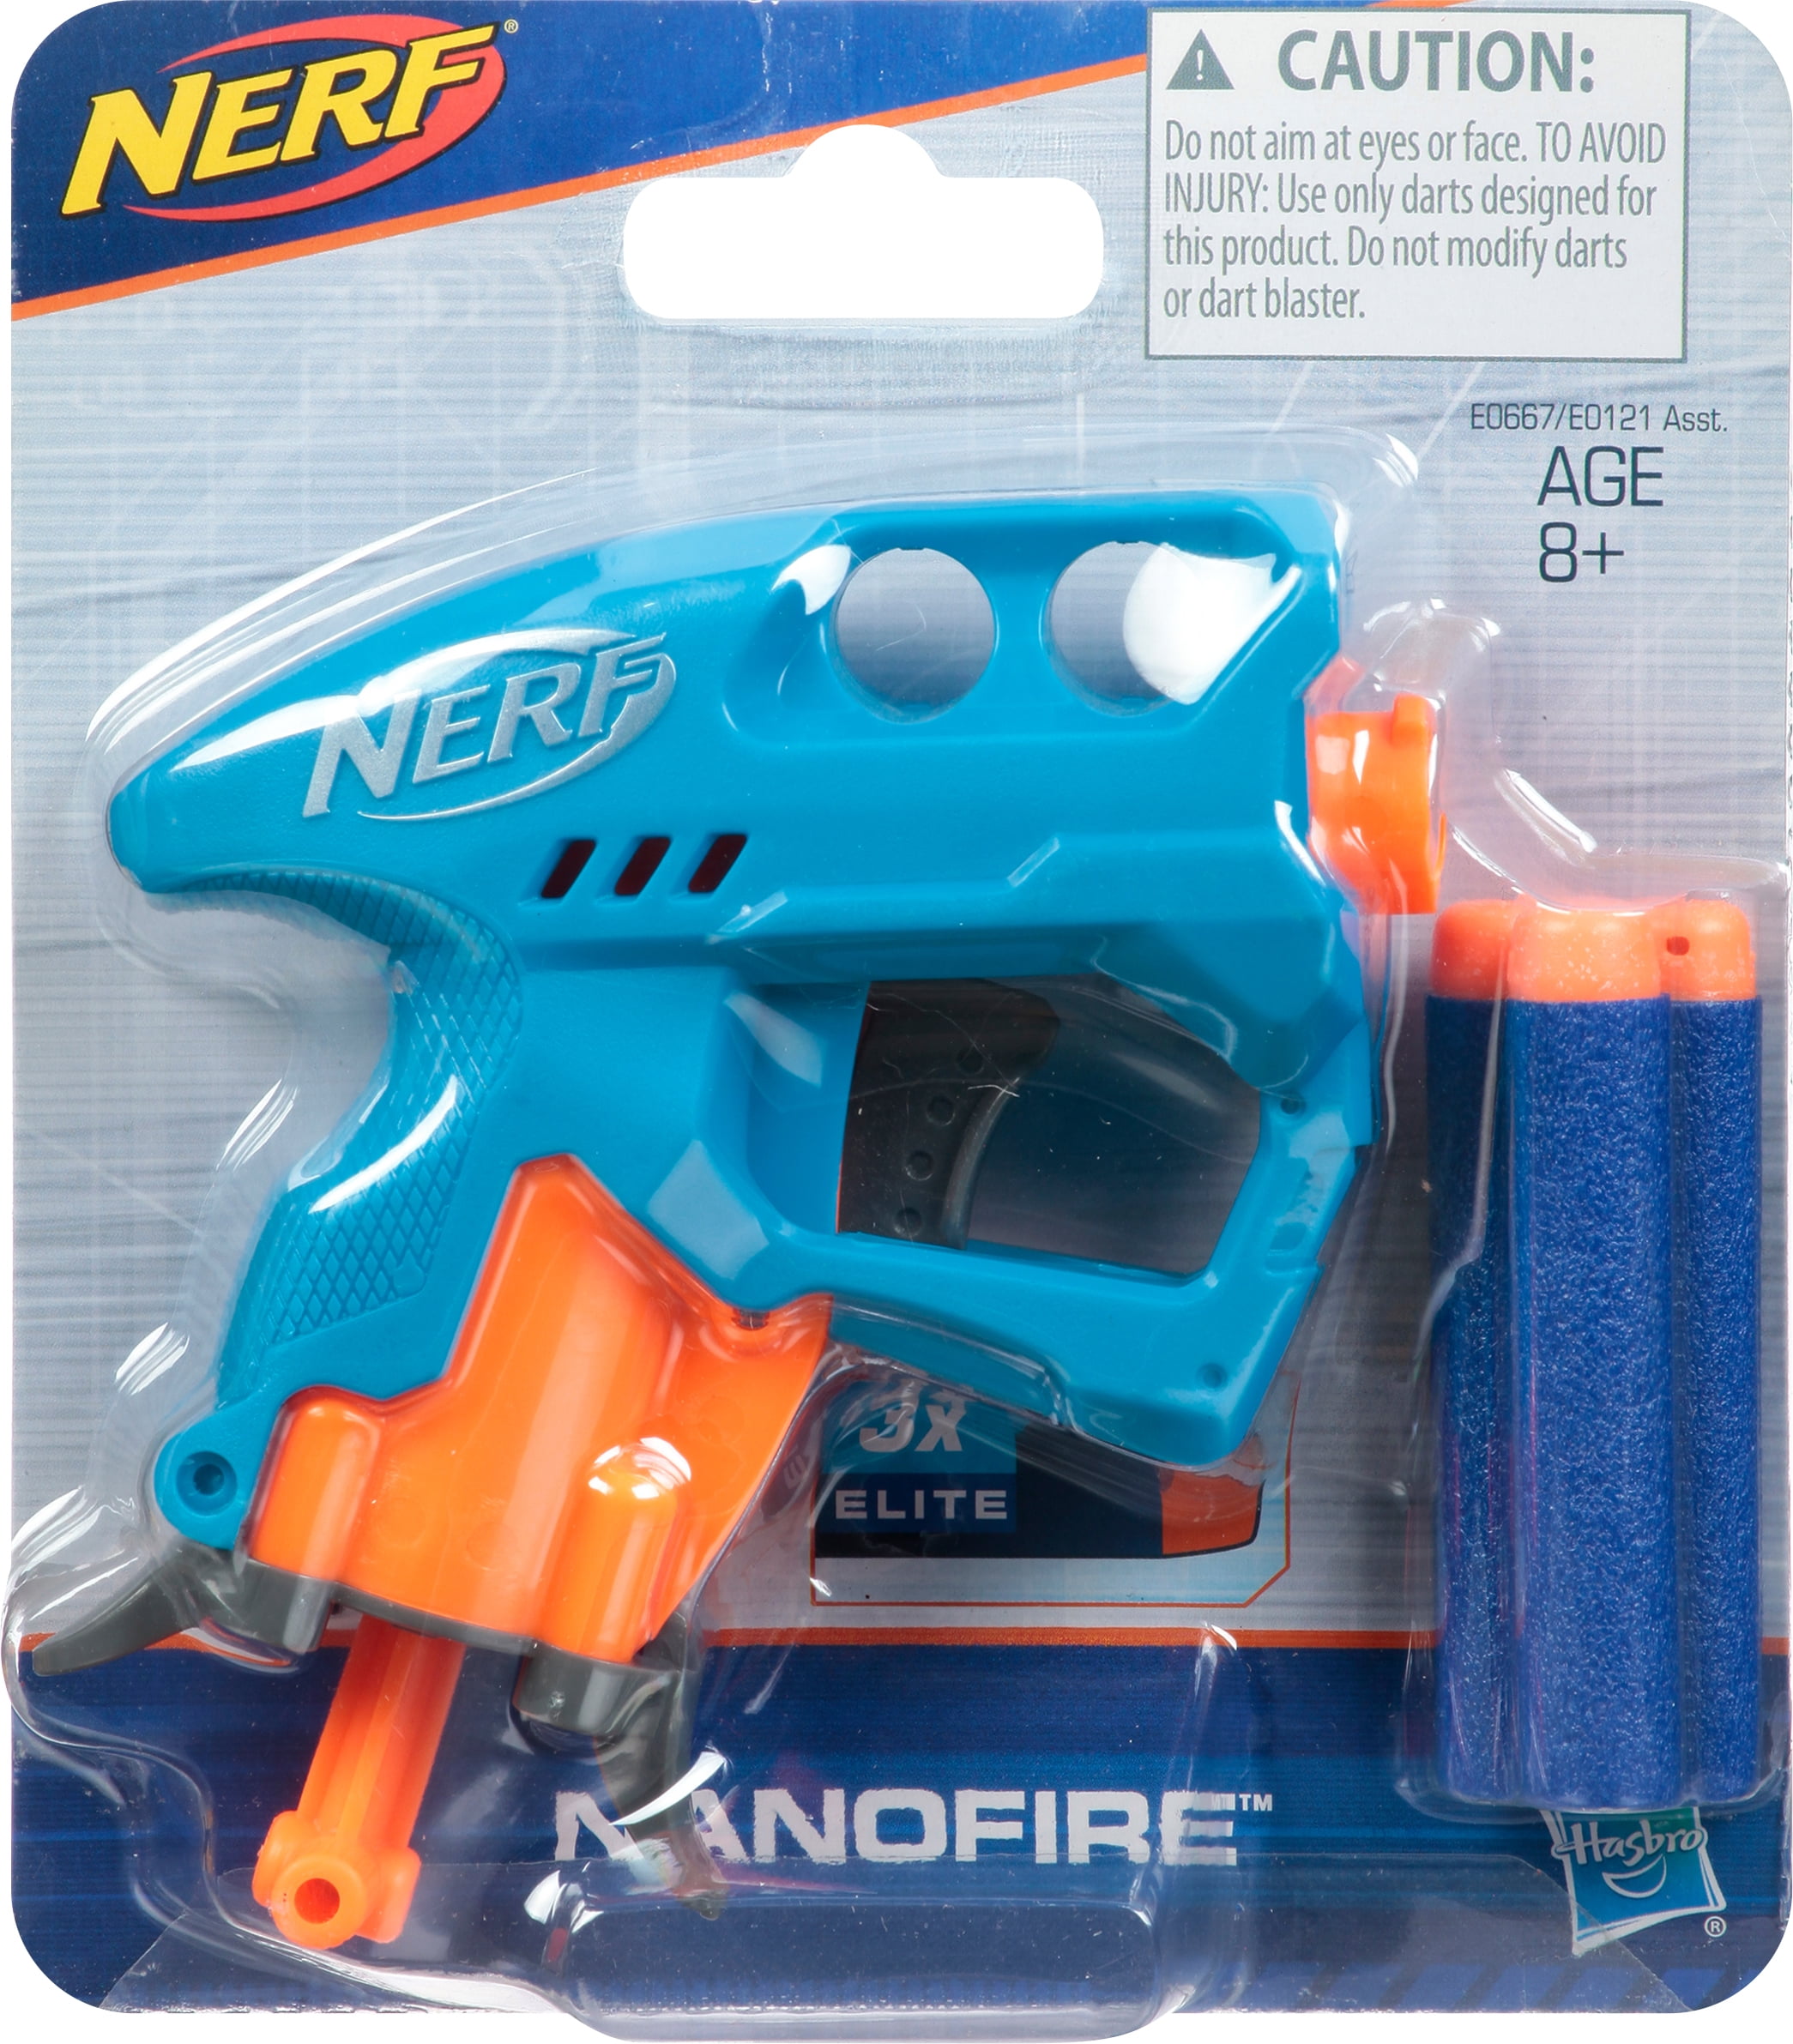 NERF N-strike Nanofire Green 3x Elite Toy Kids 8 for sale online 